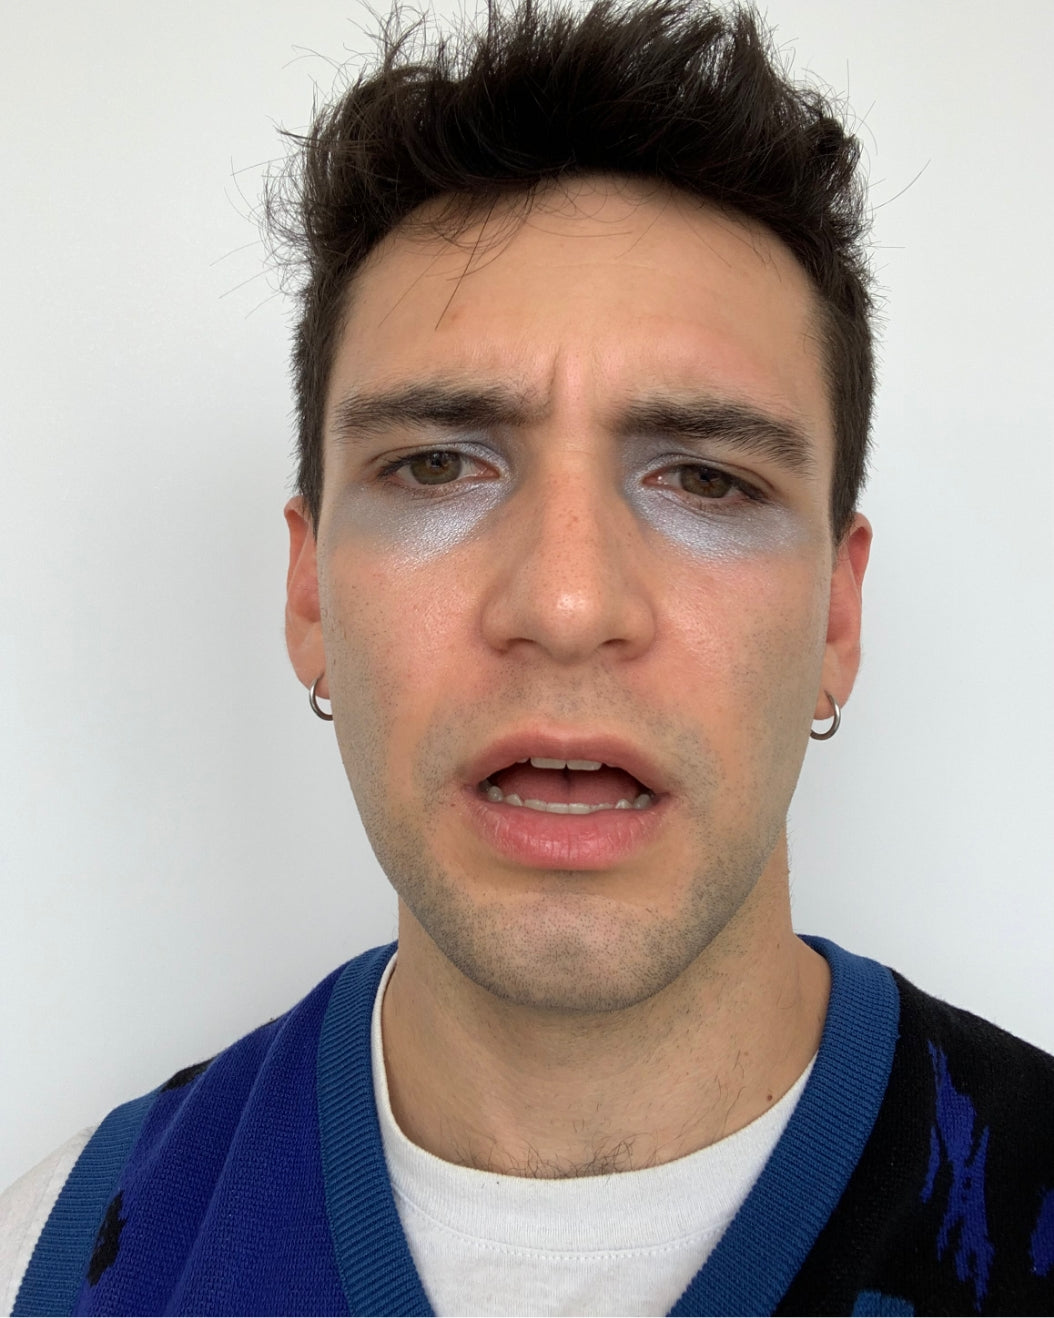 Robert wears Milk Makeup Color Chalk for a silver eye look